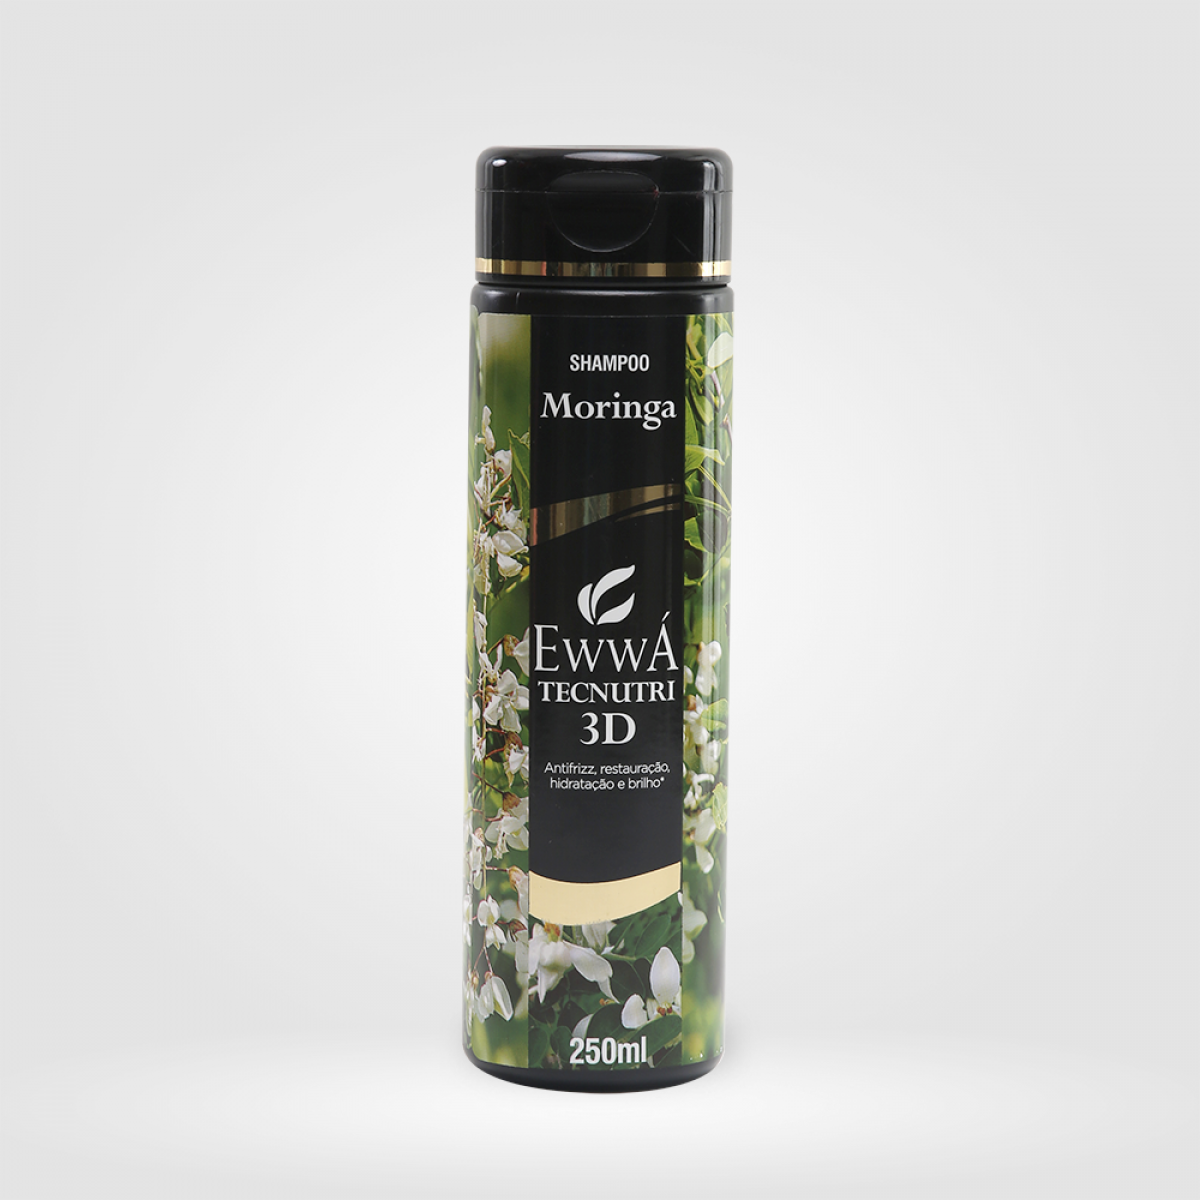 Shampoo Moringa 250ml..